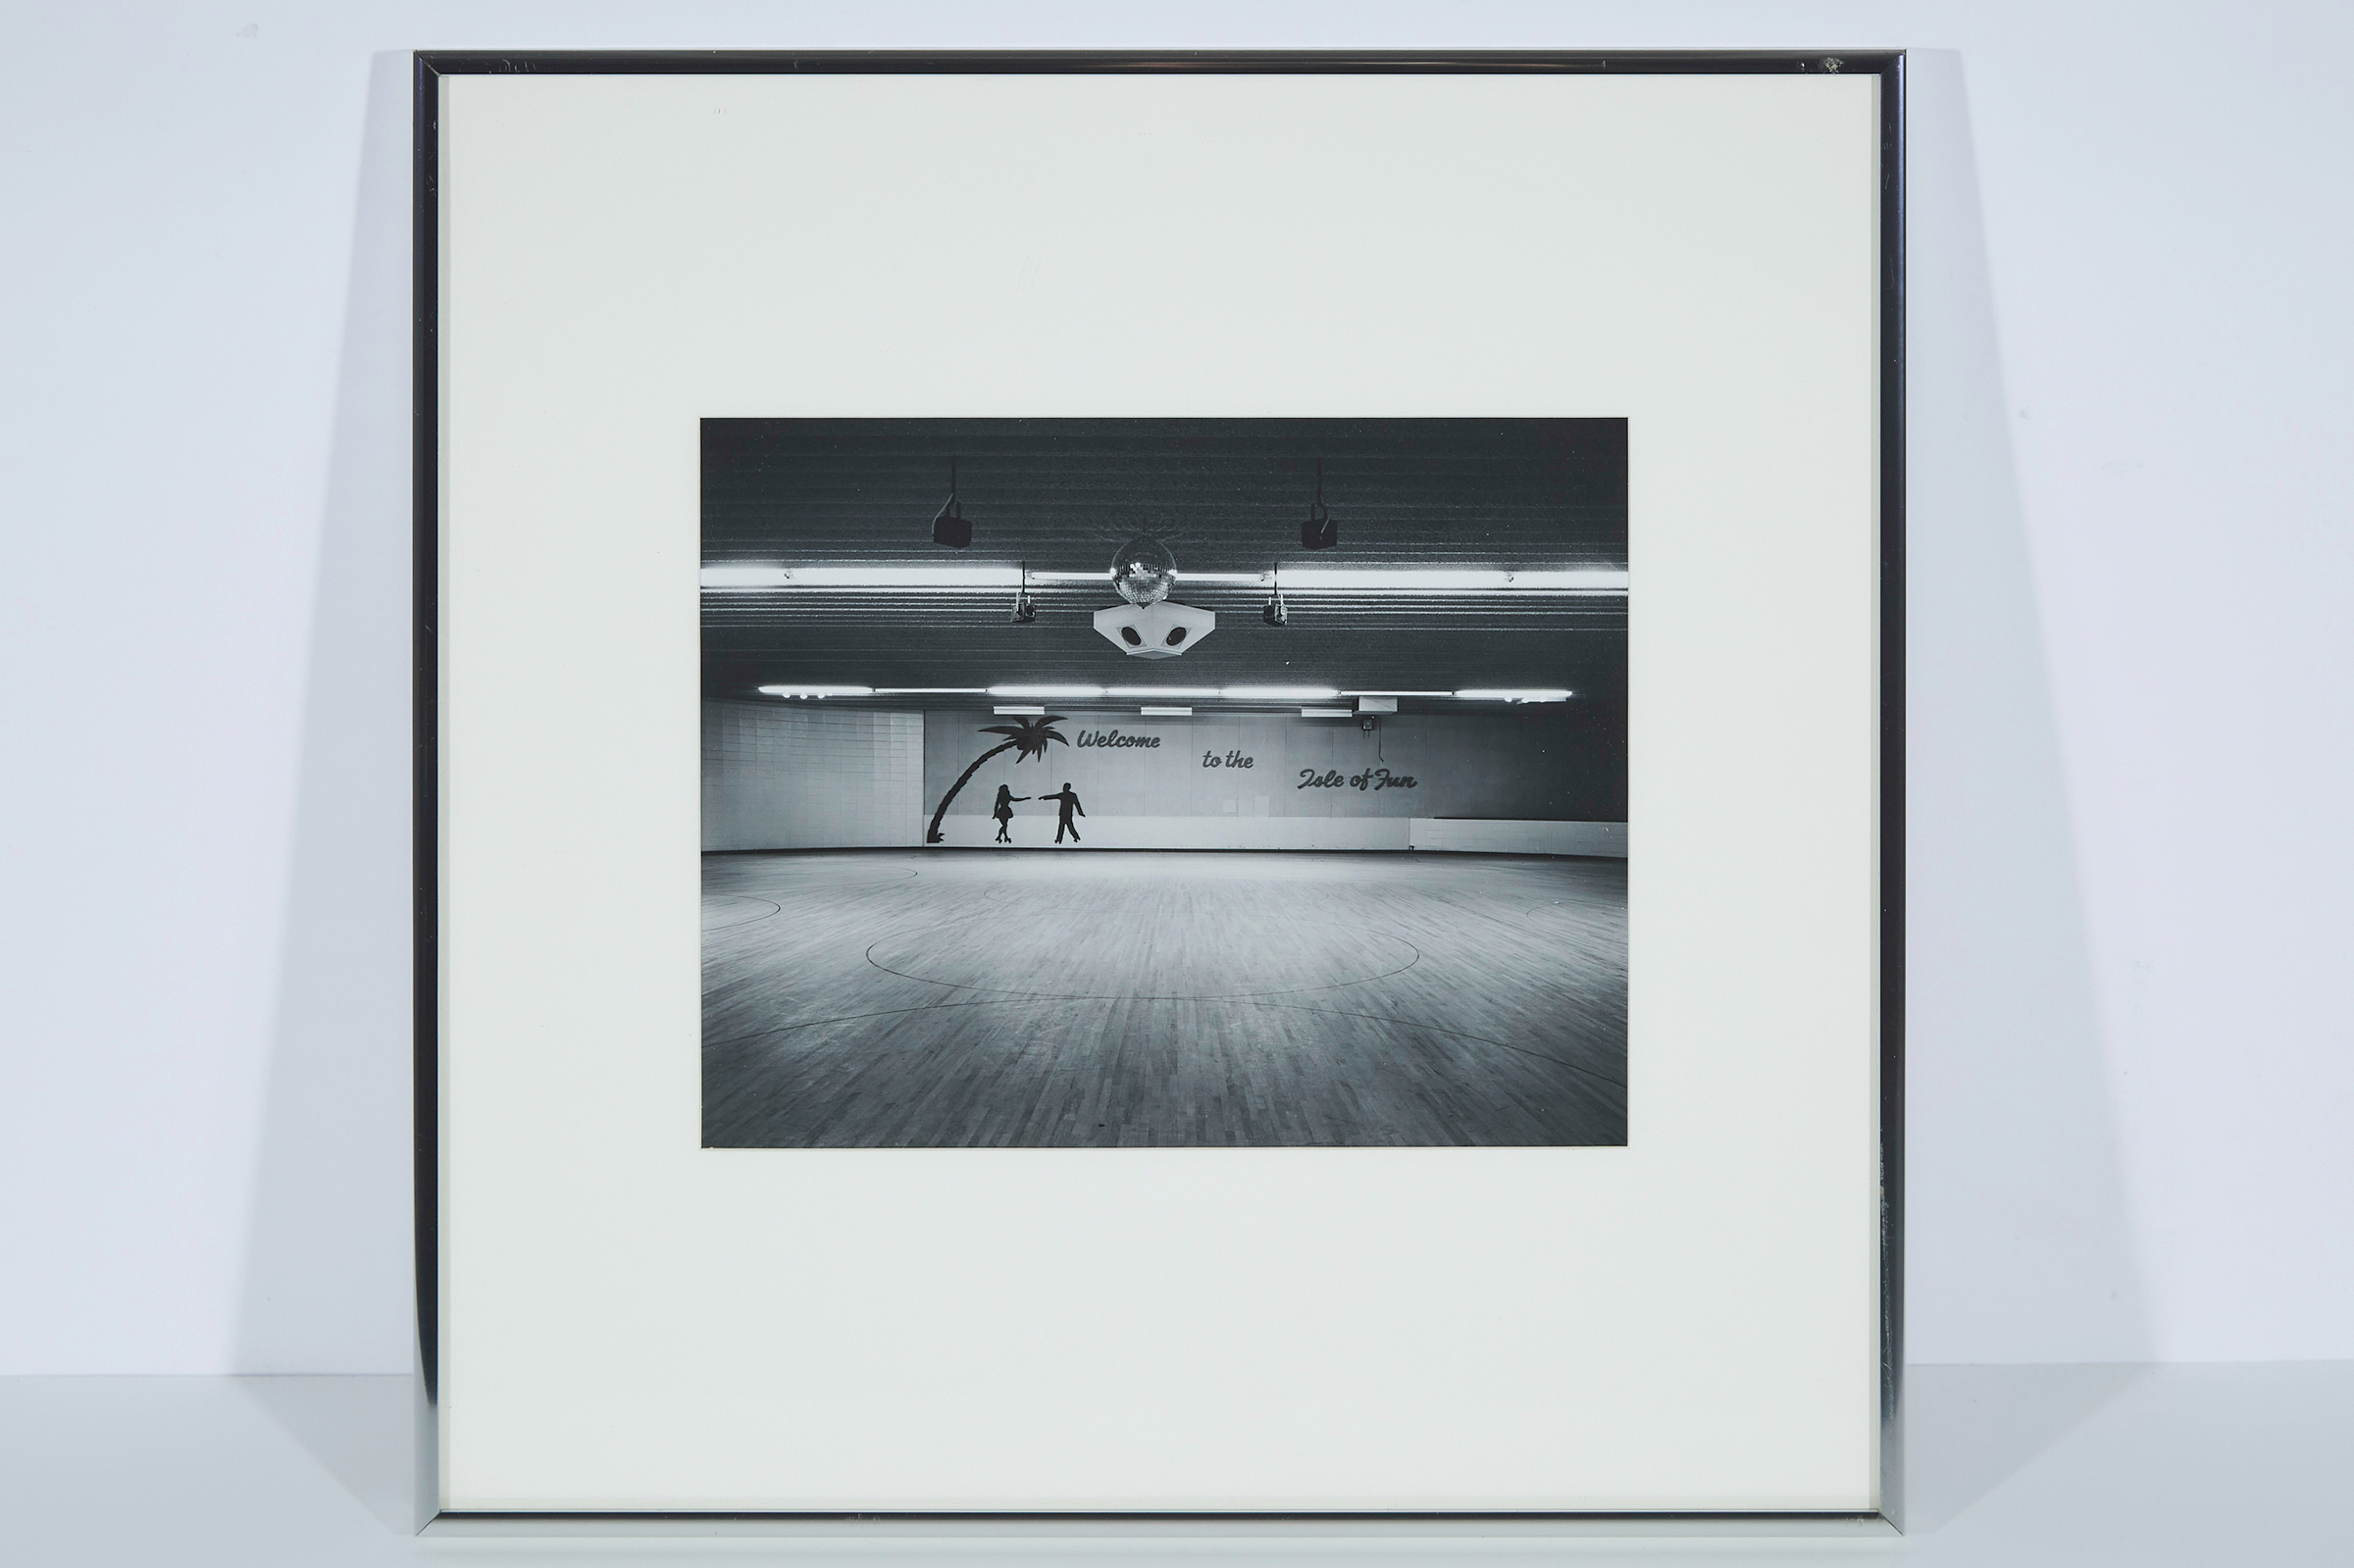     Lynne Cohen, RCA (1944-2014), Canadian Isle of fun skating rink, Grand Island, Nebraska, 1975. Contact silver print, 7.25 x 9.25&#8243;,
Yarlow/Salzman Gallery, Toronto;
Private Collection, Massachusetts

